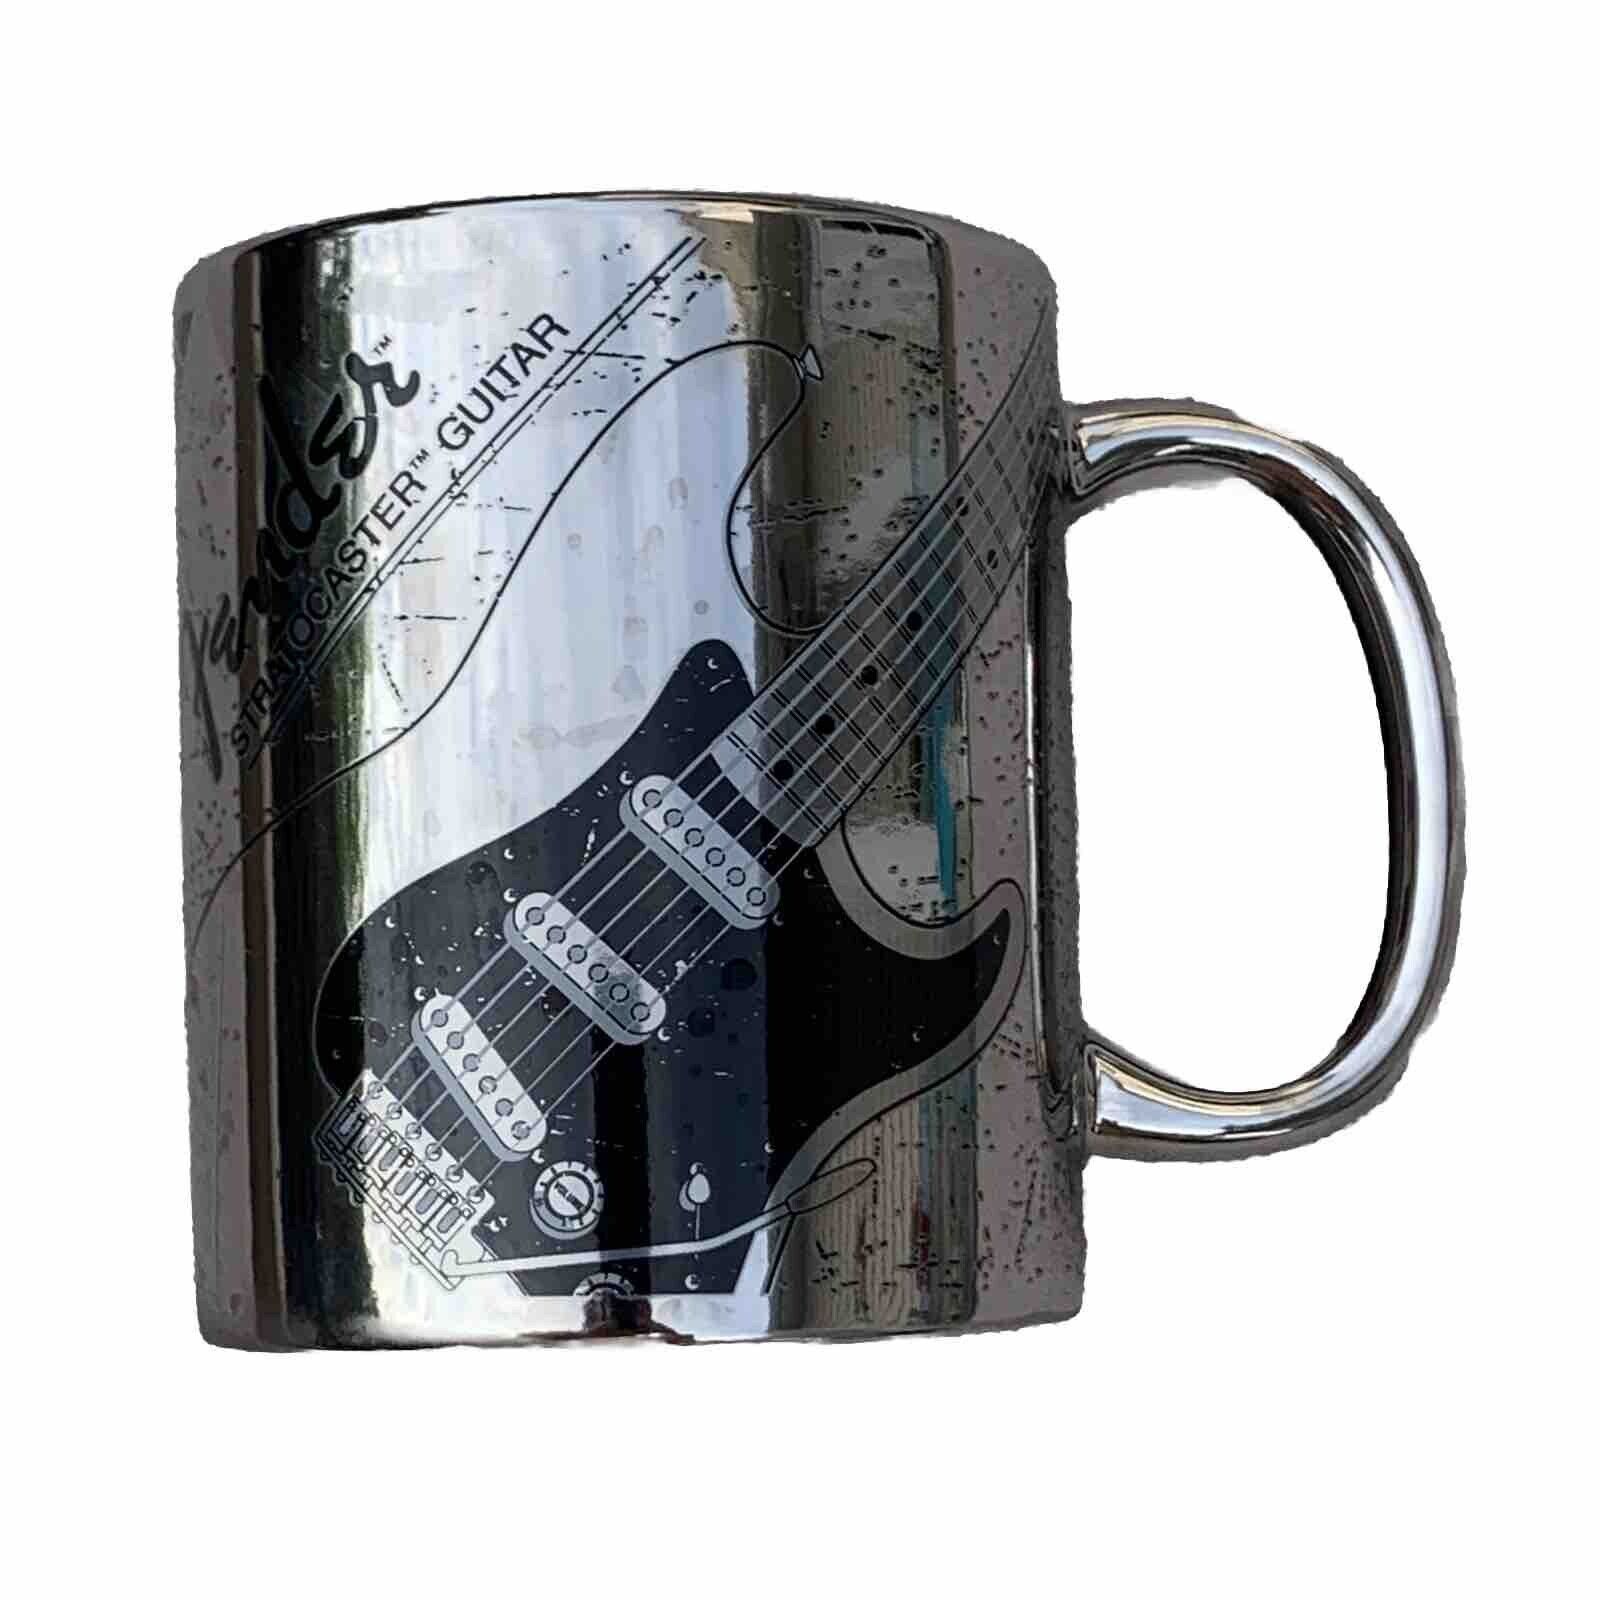 Paladone Fender Stratocaster Guitar Silver Black Coffee Mug Tea Cup